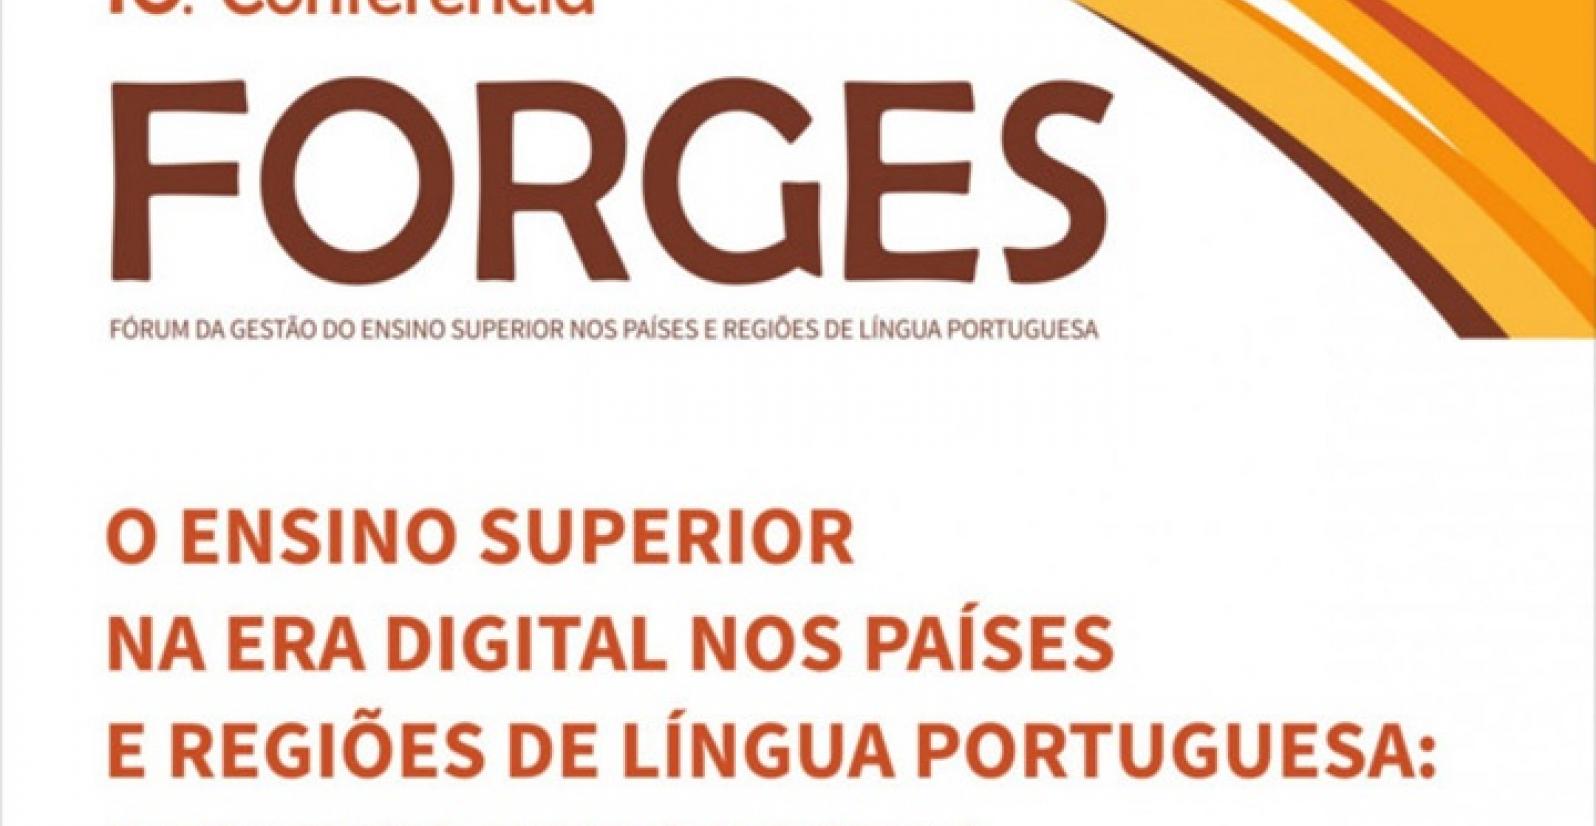 Politécnico de Lisboa marca presença na 10.ª conferência Forges